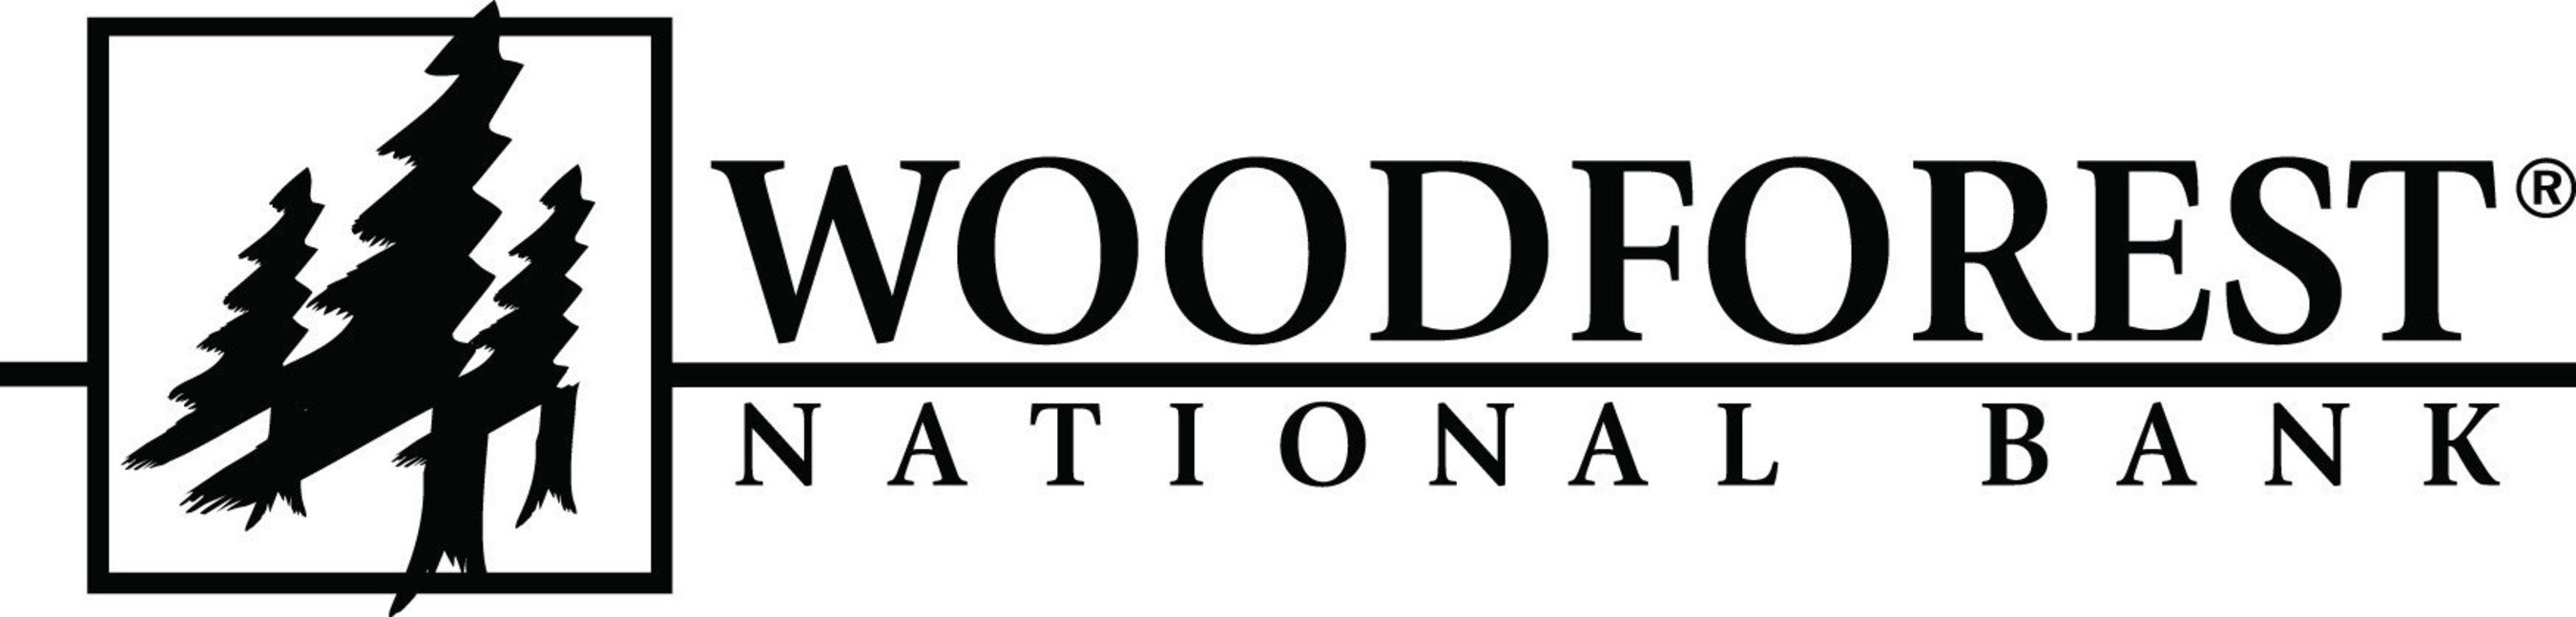 Woodforest National Bank logo